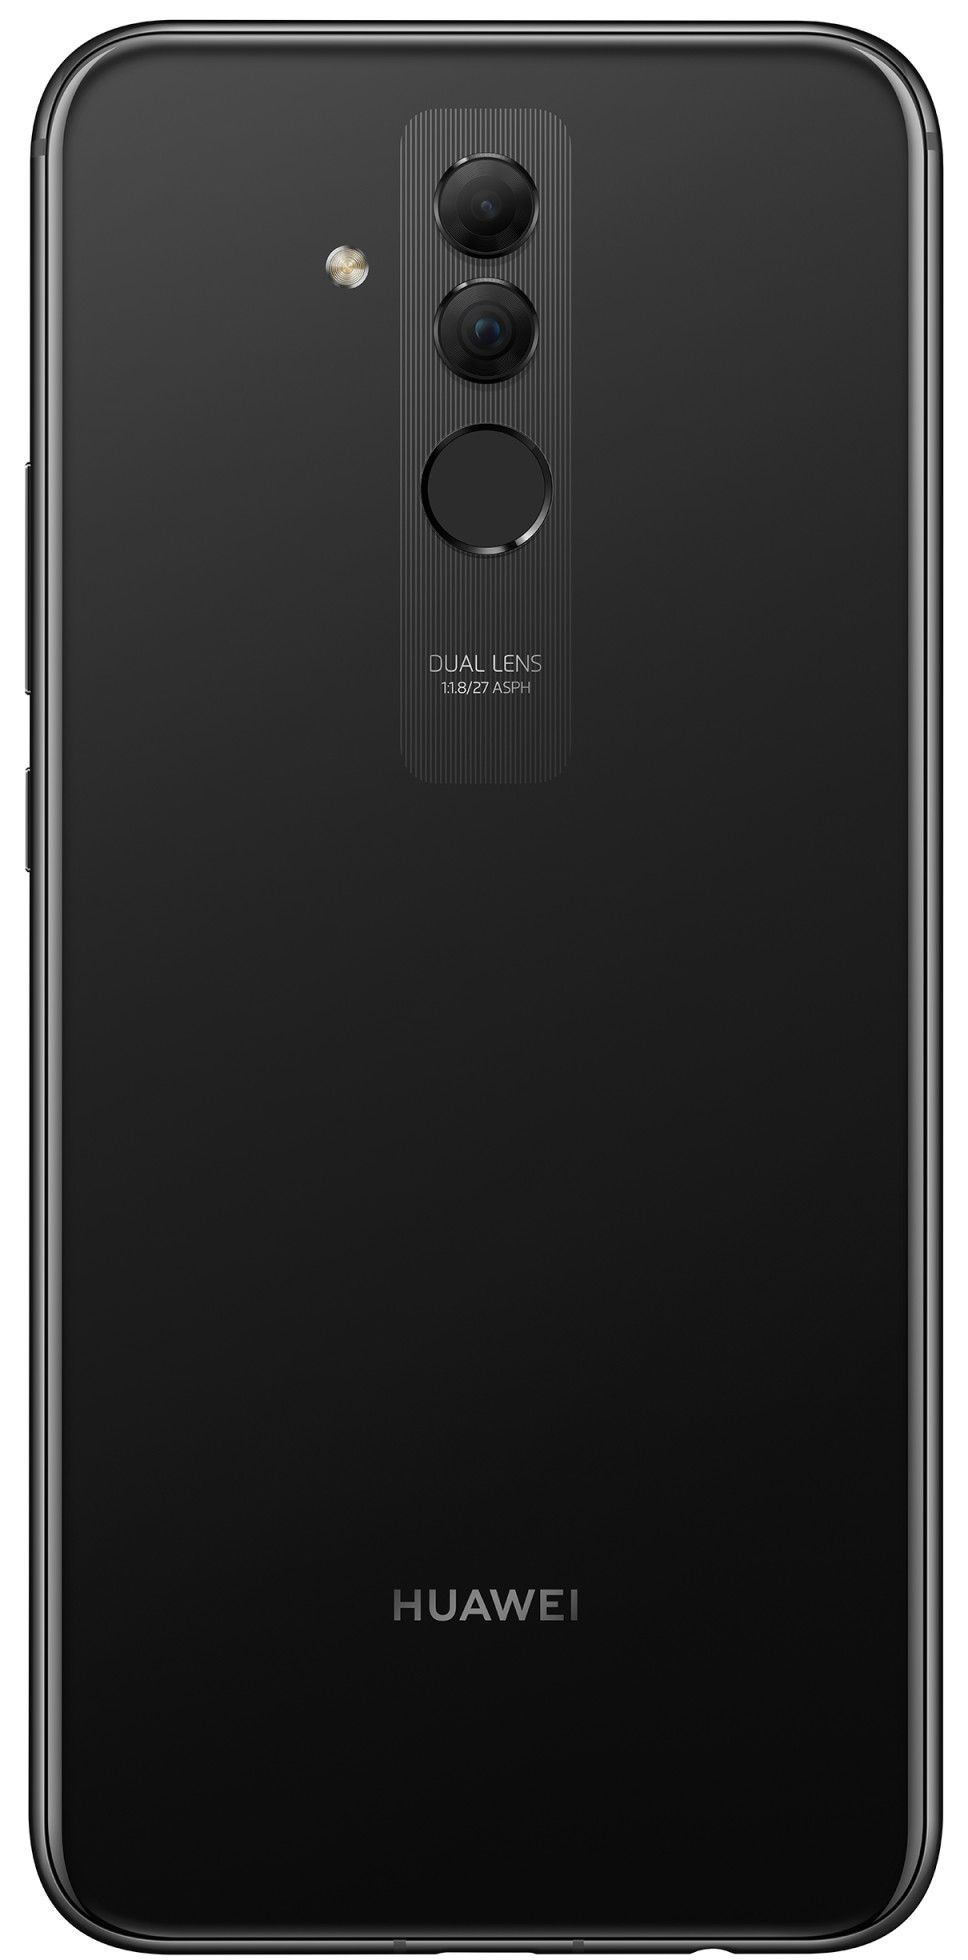 Хуавей 20 характеристики. Huawei Mate 20 Lite. Huawei Mate 20 Lite 64gb. Huawei Mate 20 Lite Sne-lx1. Смартфон Huawei Mate 20 Lite Black (Sne-lx1).